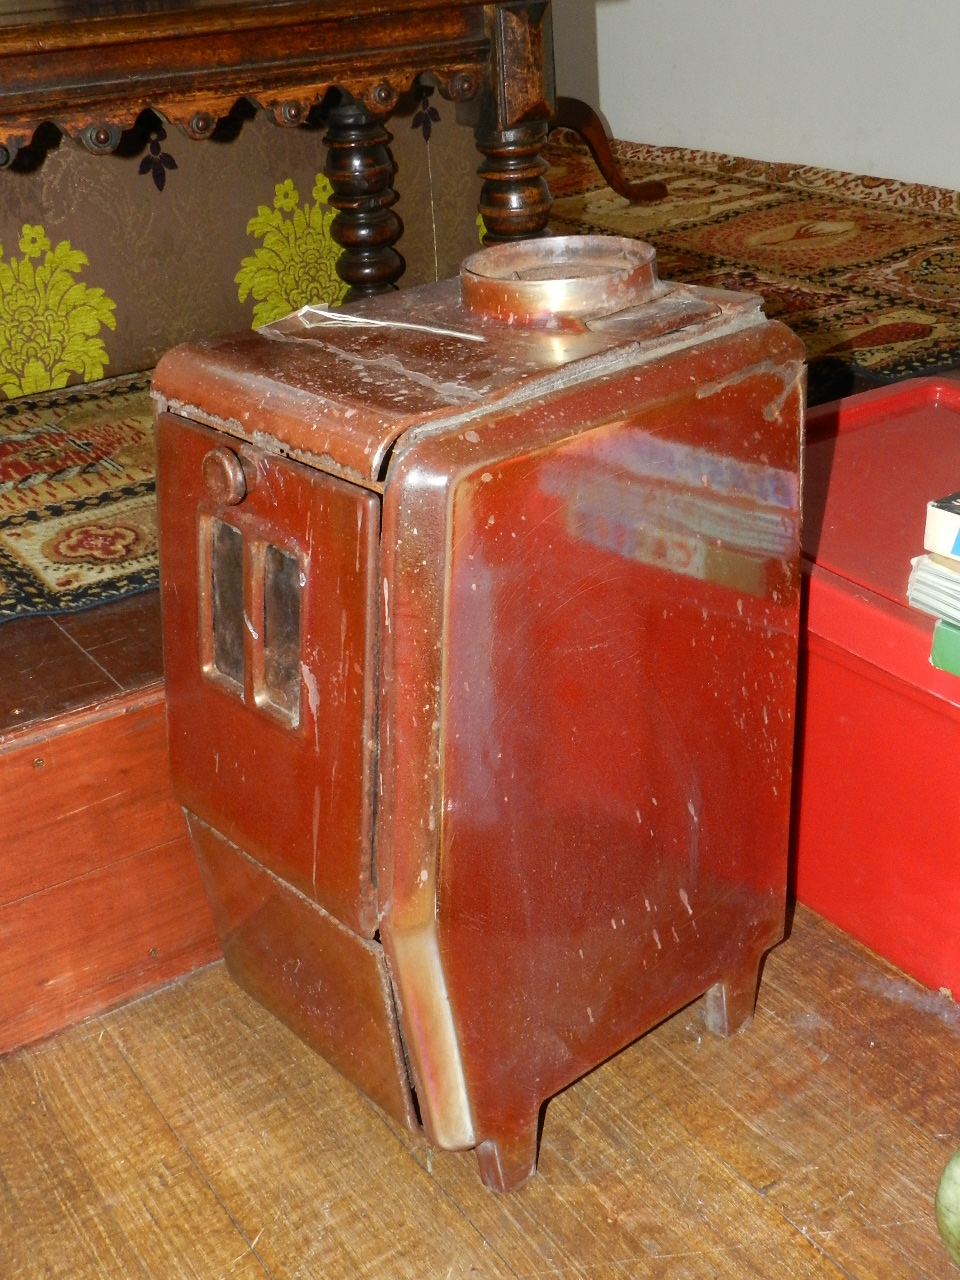 A cast iron solid fuel burner in a metallic copper enamel.